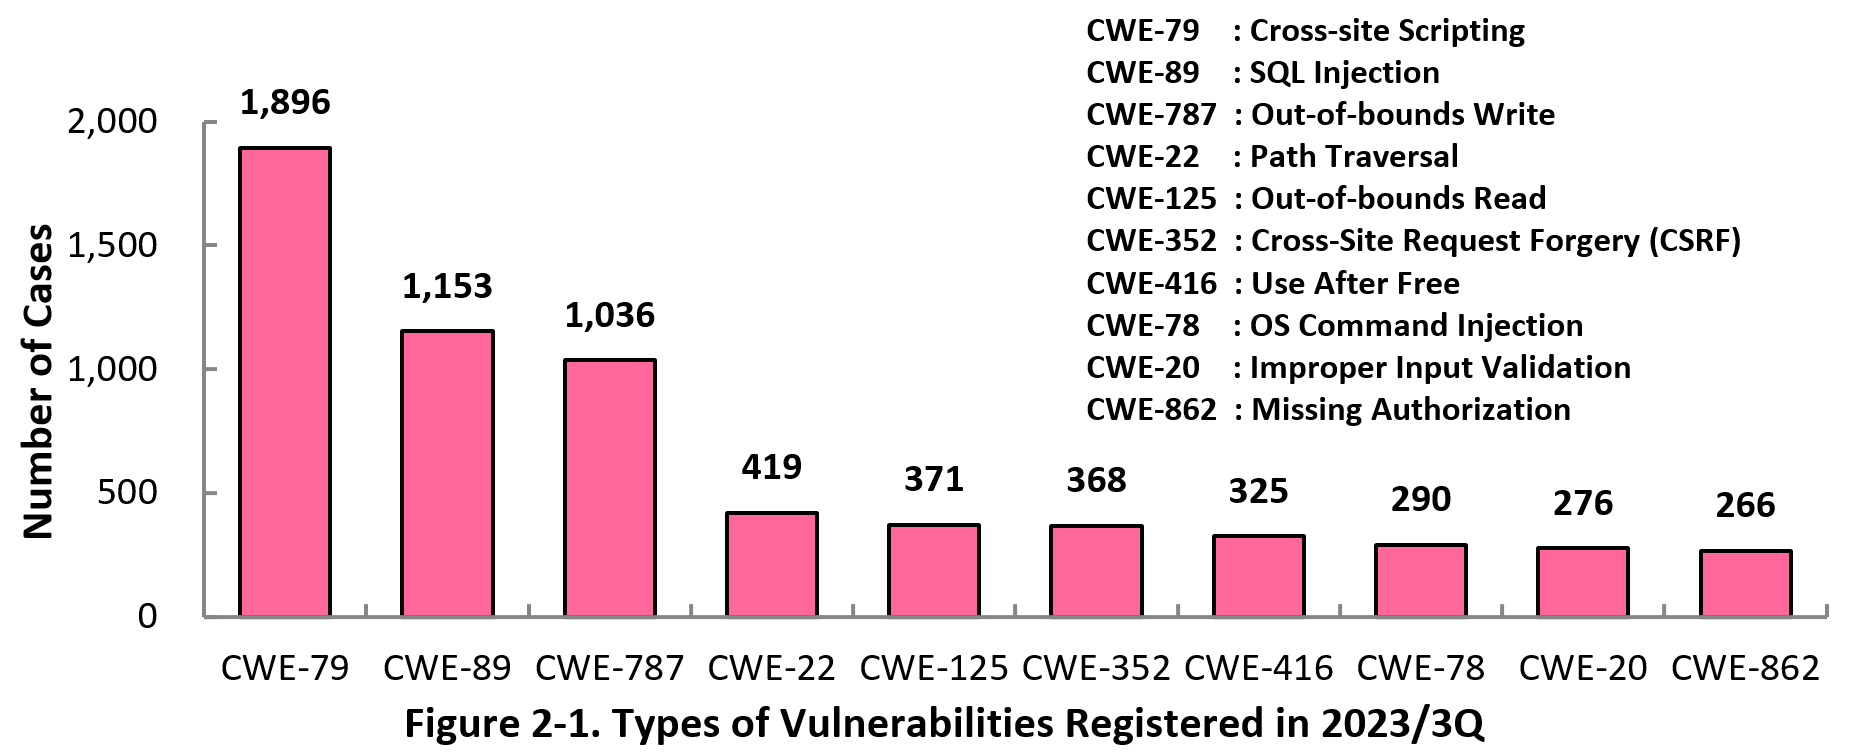 Figure 2-1. Types of Vulnerabilities Registered in 2023/1Q